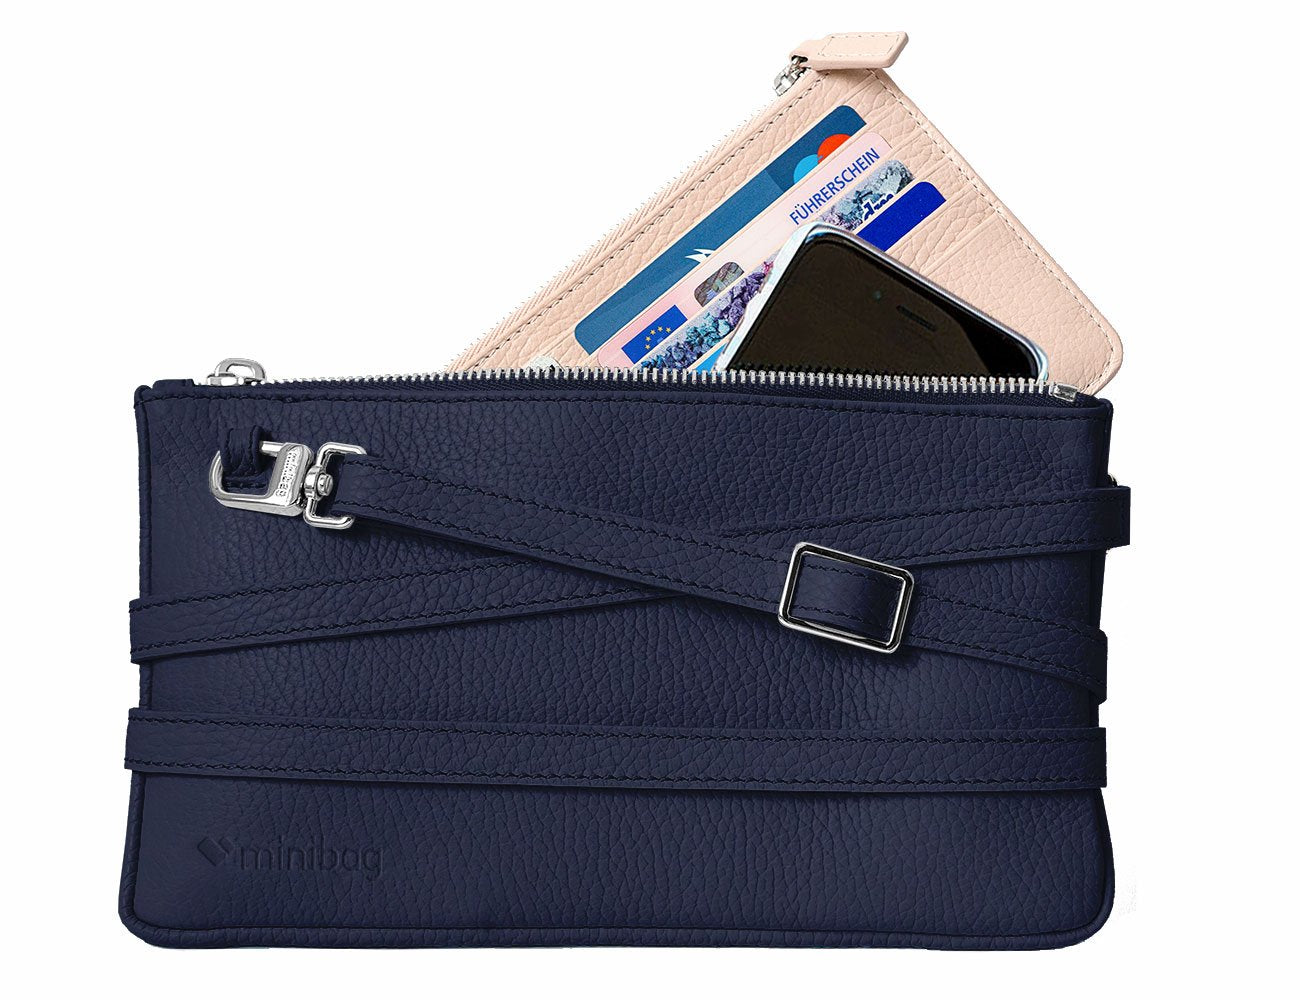 minibag navy, Ledertasche dunkelblau, Clutch dunkelblau, minibag Wallet nude, Geldtasche dunkelblau